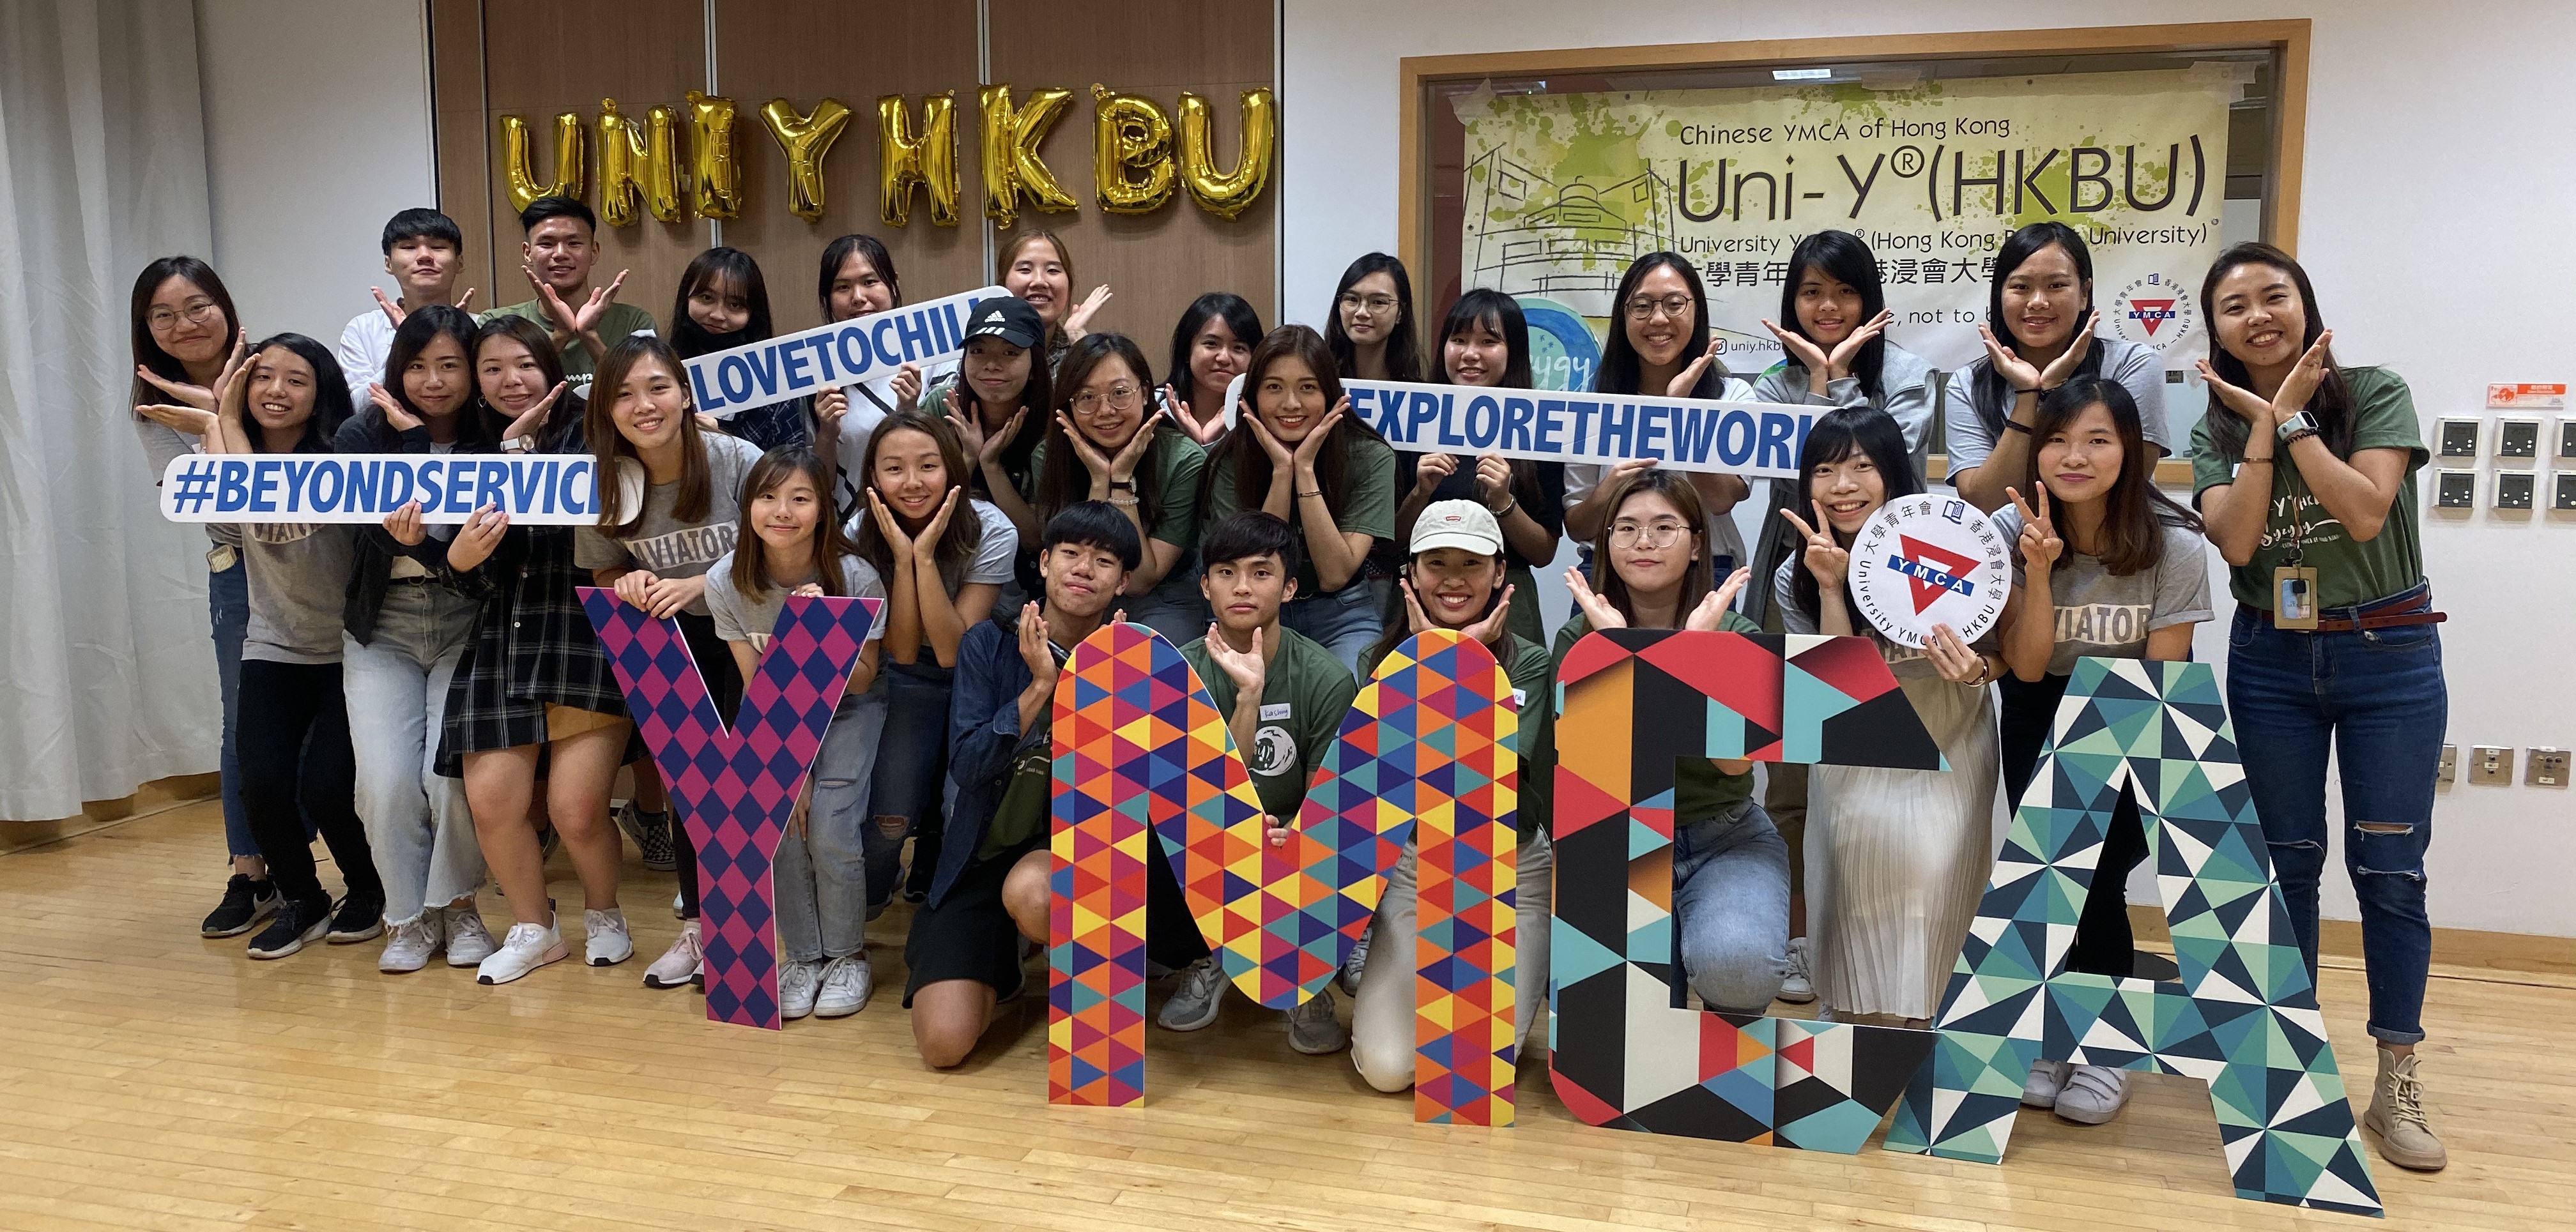 Welcome to Uni-Y (HKBU)!